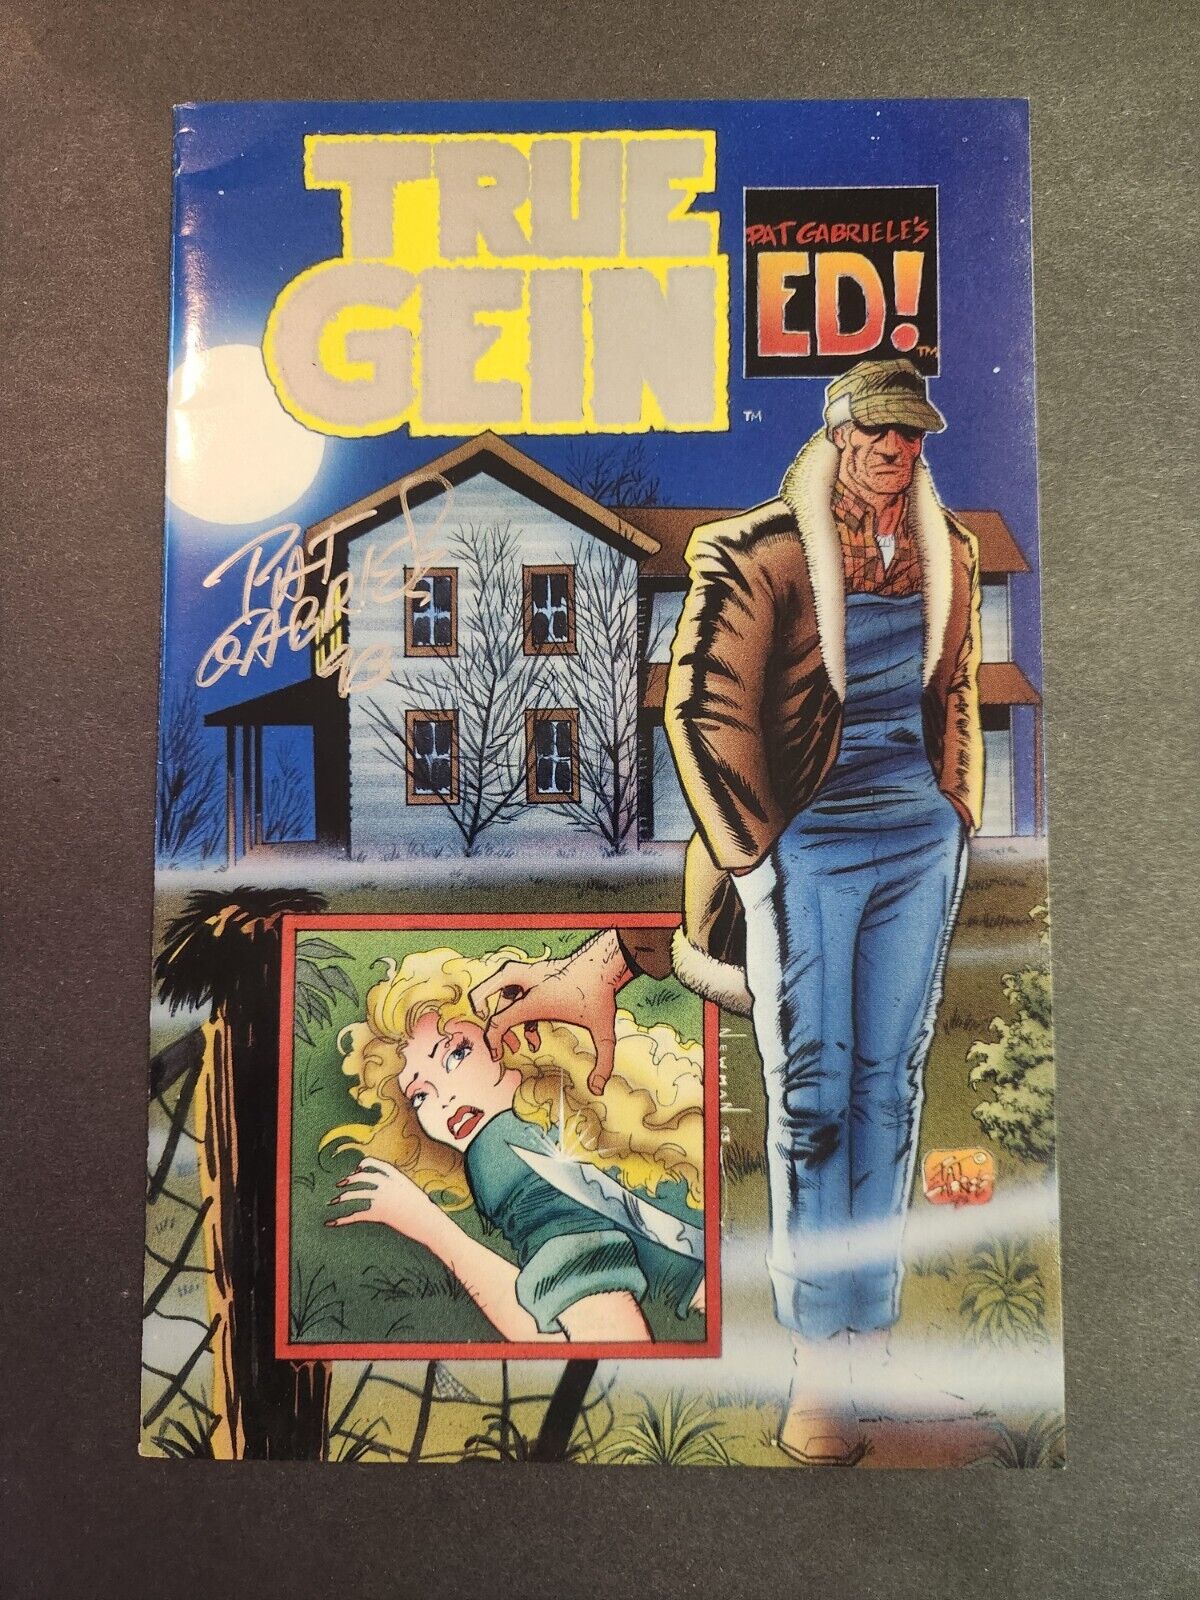 True Gein Comic Ed Gein 1993 Signed Autograph By Pat Gabriel